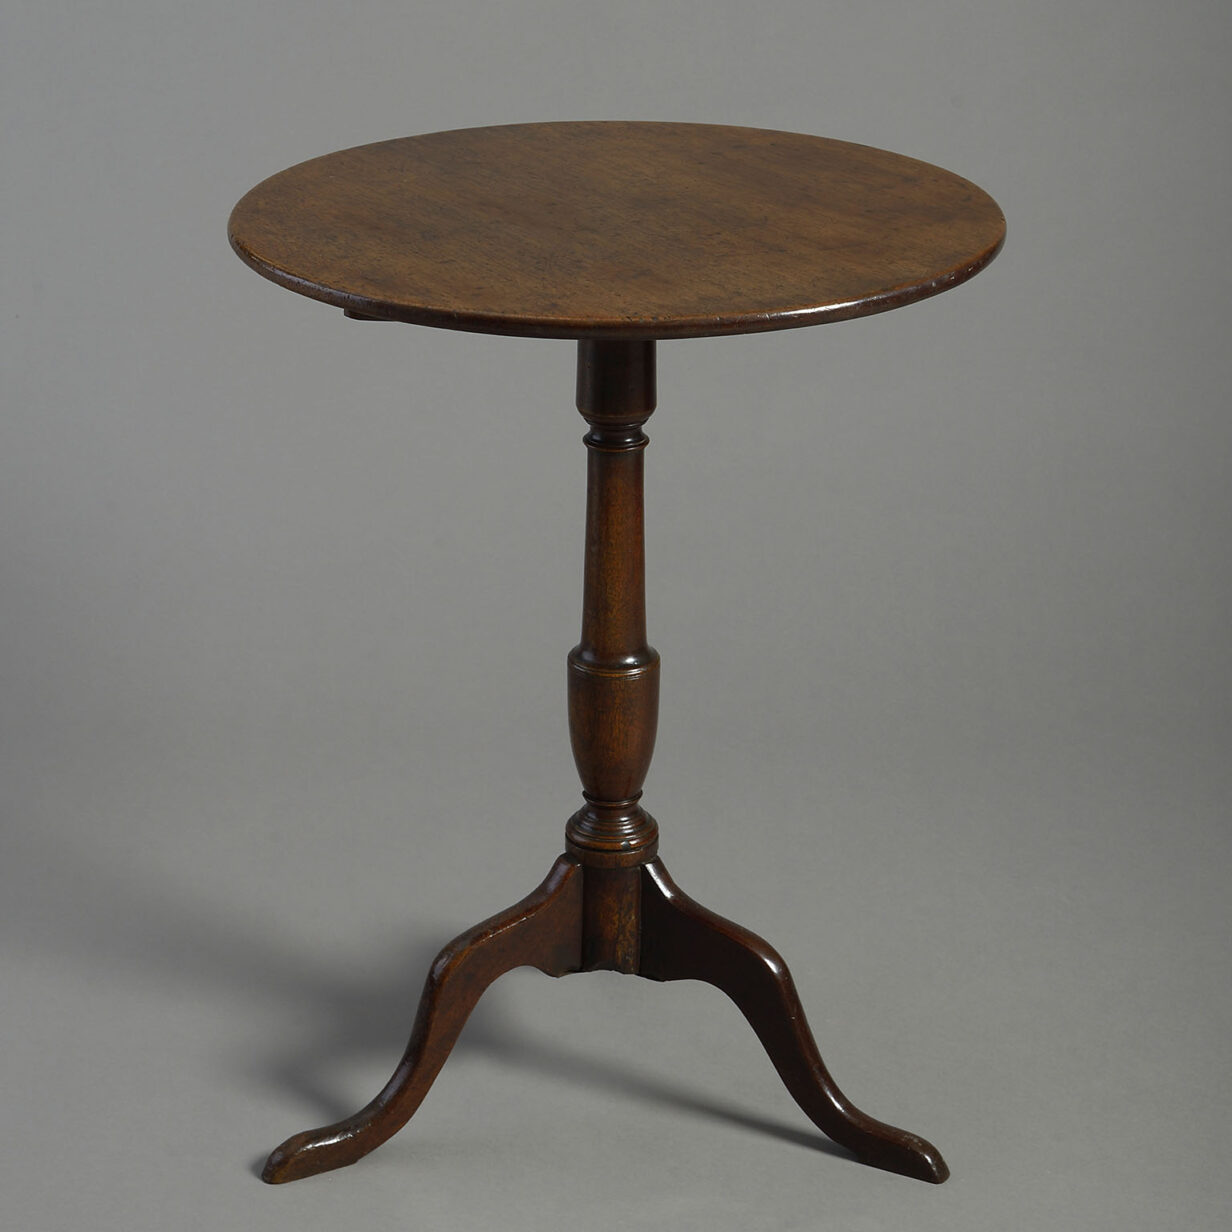 Mid-18th century george iii period mahogany tripod table